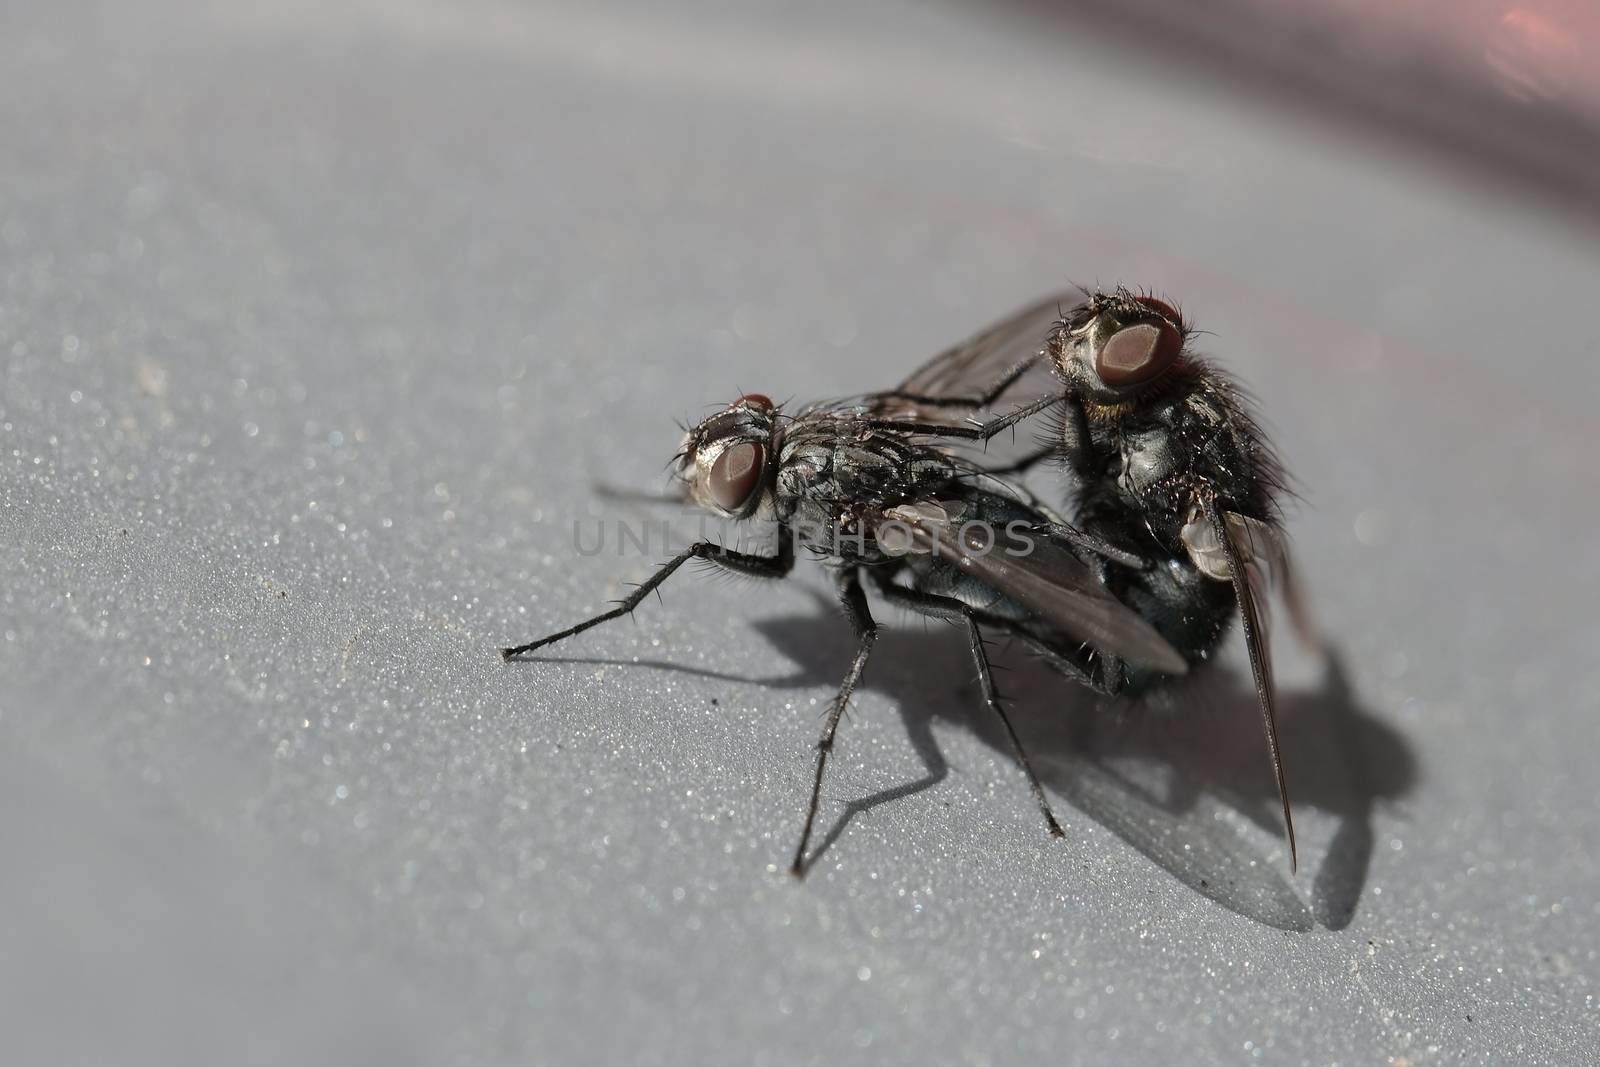 Flies mating by Gudella